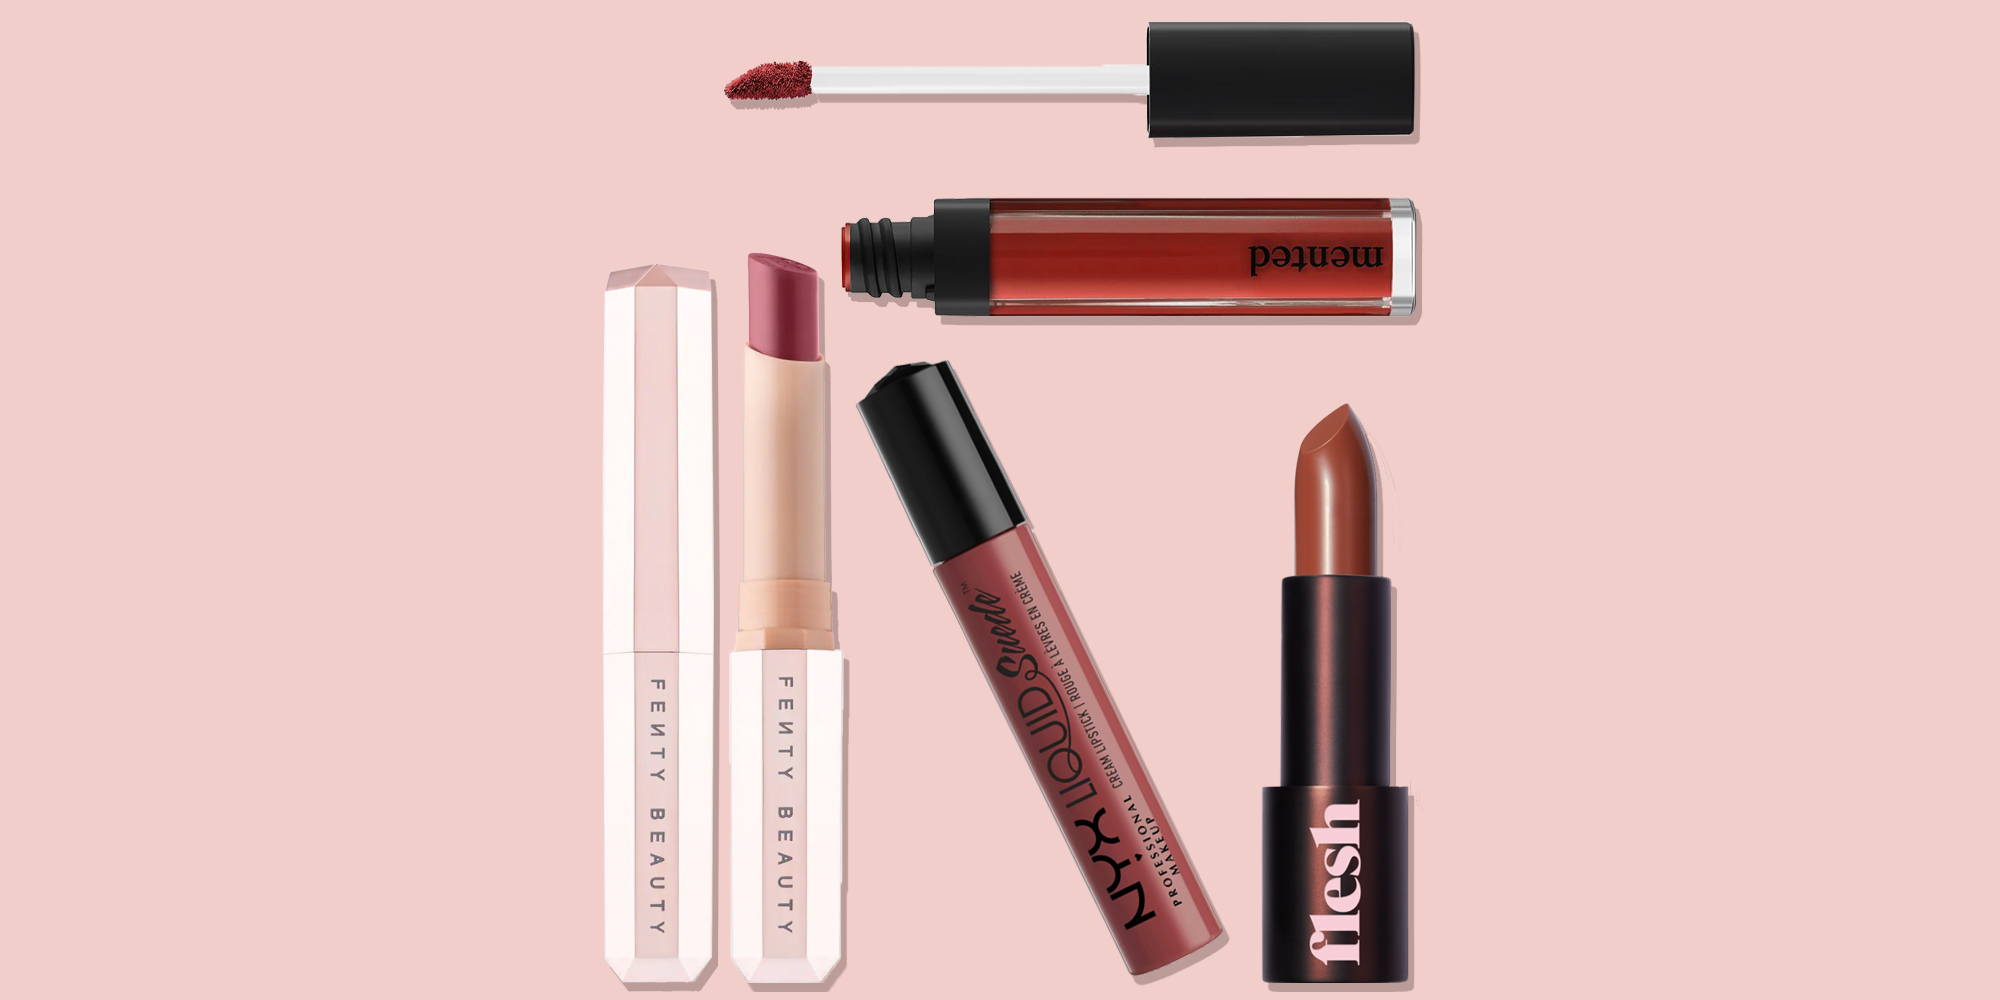 15 Best Lipsticks for Dark Skin of 2020 - Top Lipstick for Brown